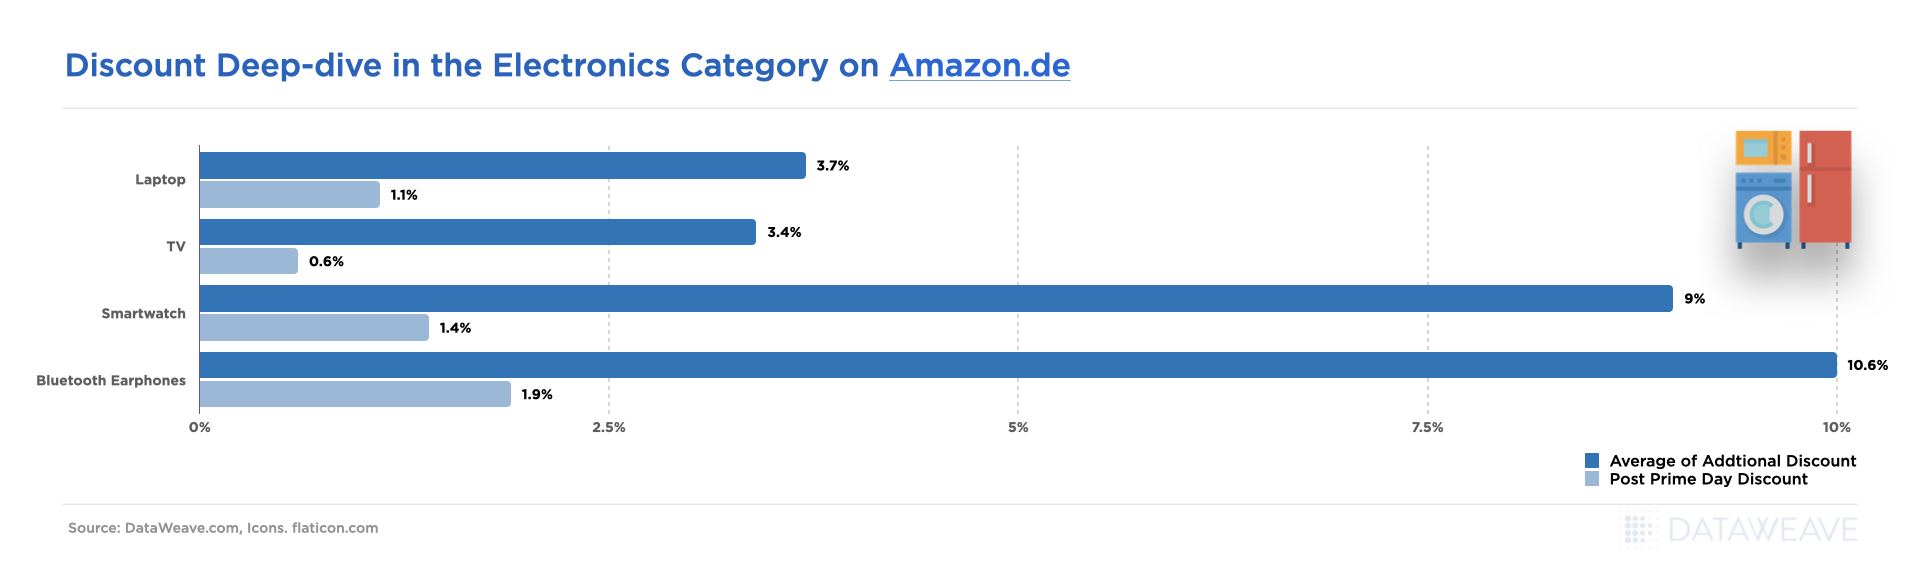 Discounts on Electronics Category on Amazon.de